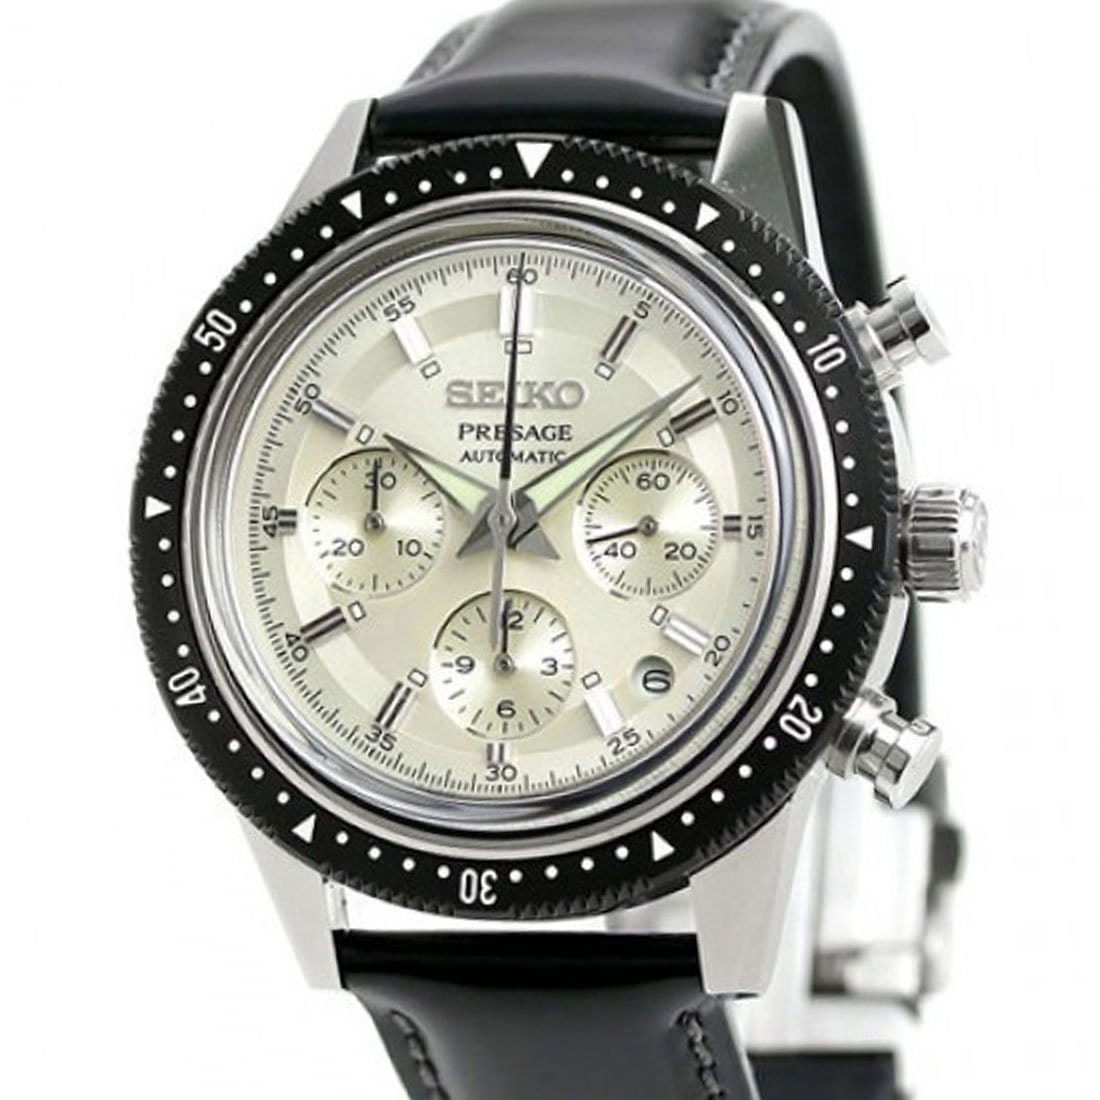 SARK015 Seiko Presage JDM 55th Anniversary Mens Automatic Watch (PRE-ORDER)